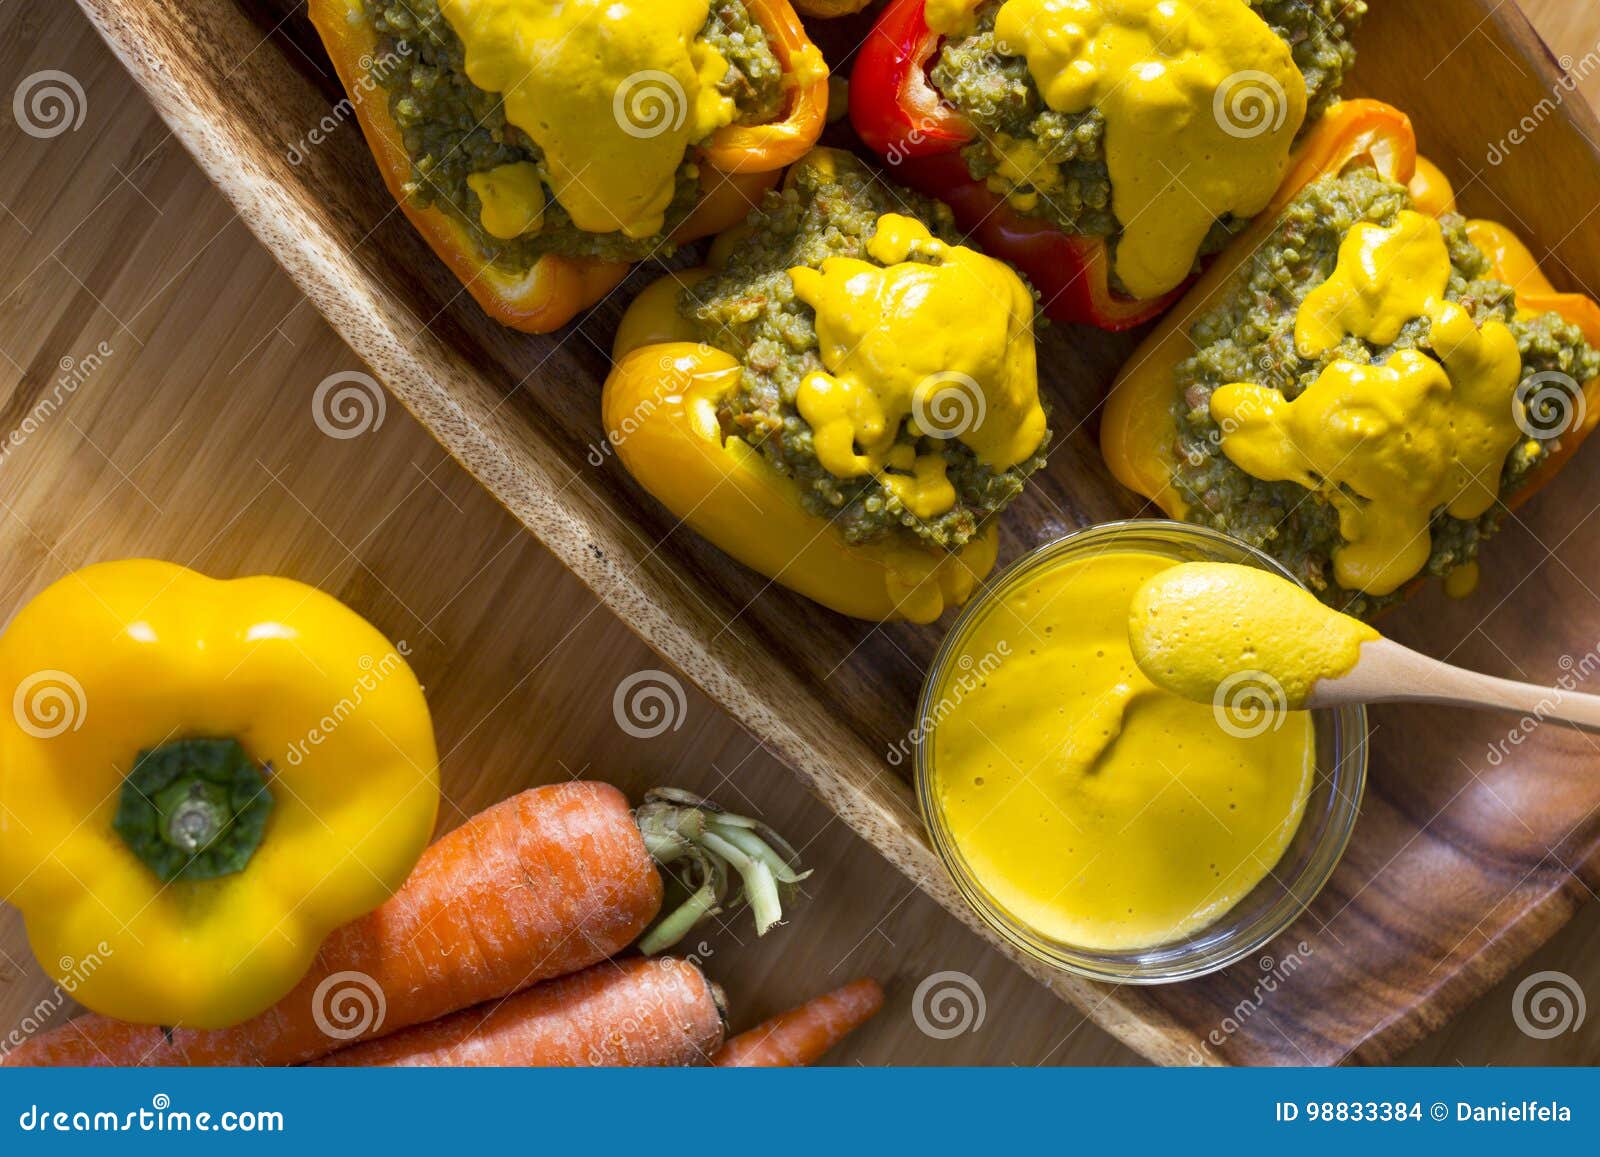 peppers stuffed with quinoa and avocado pesto